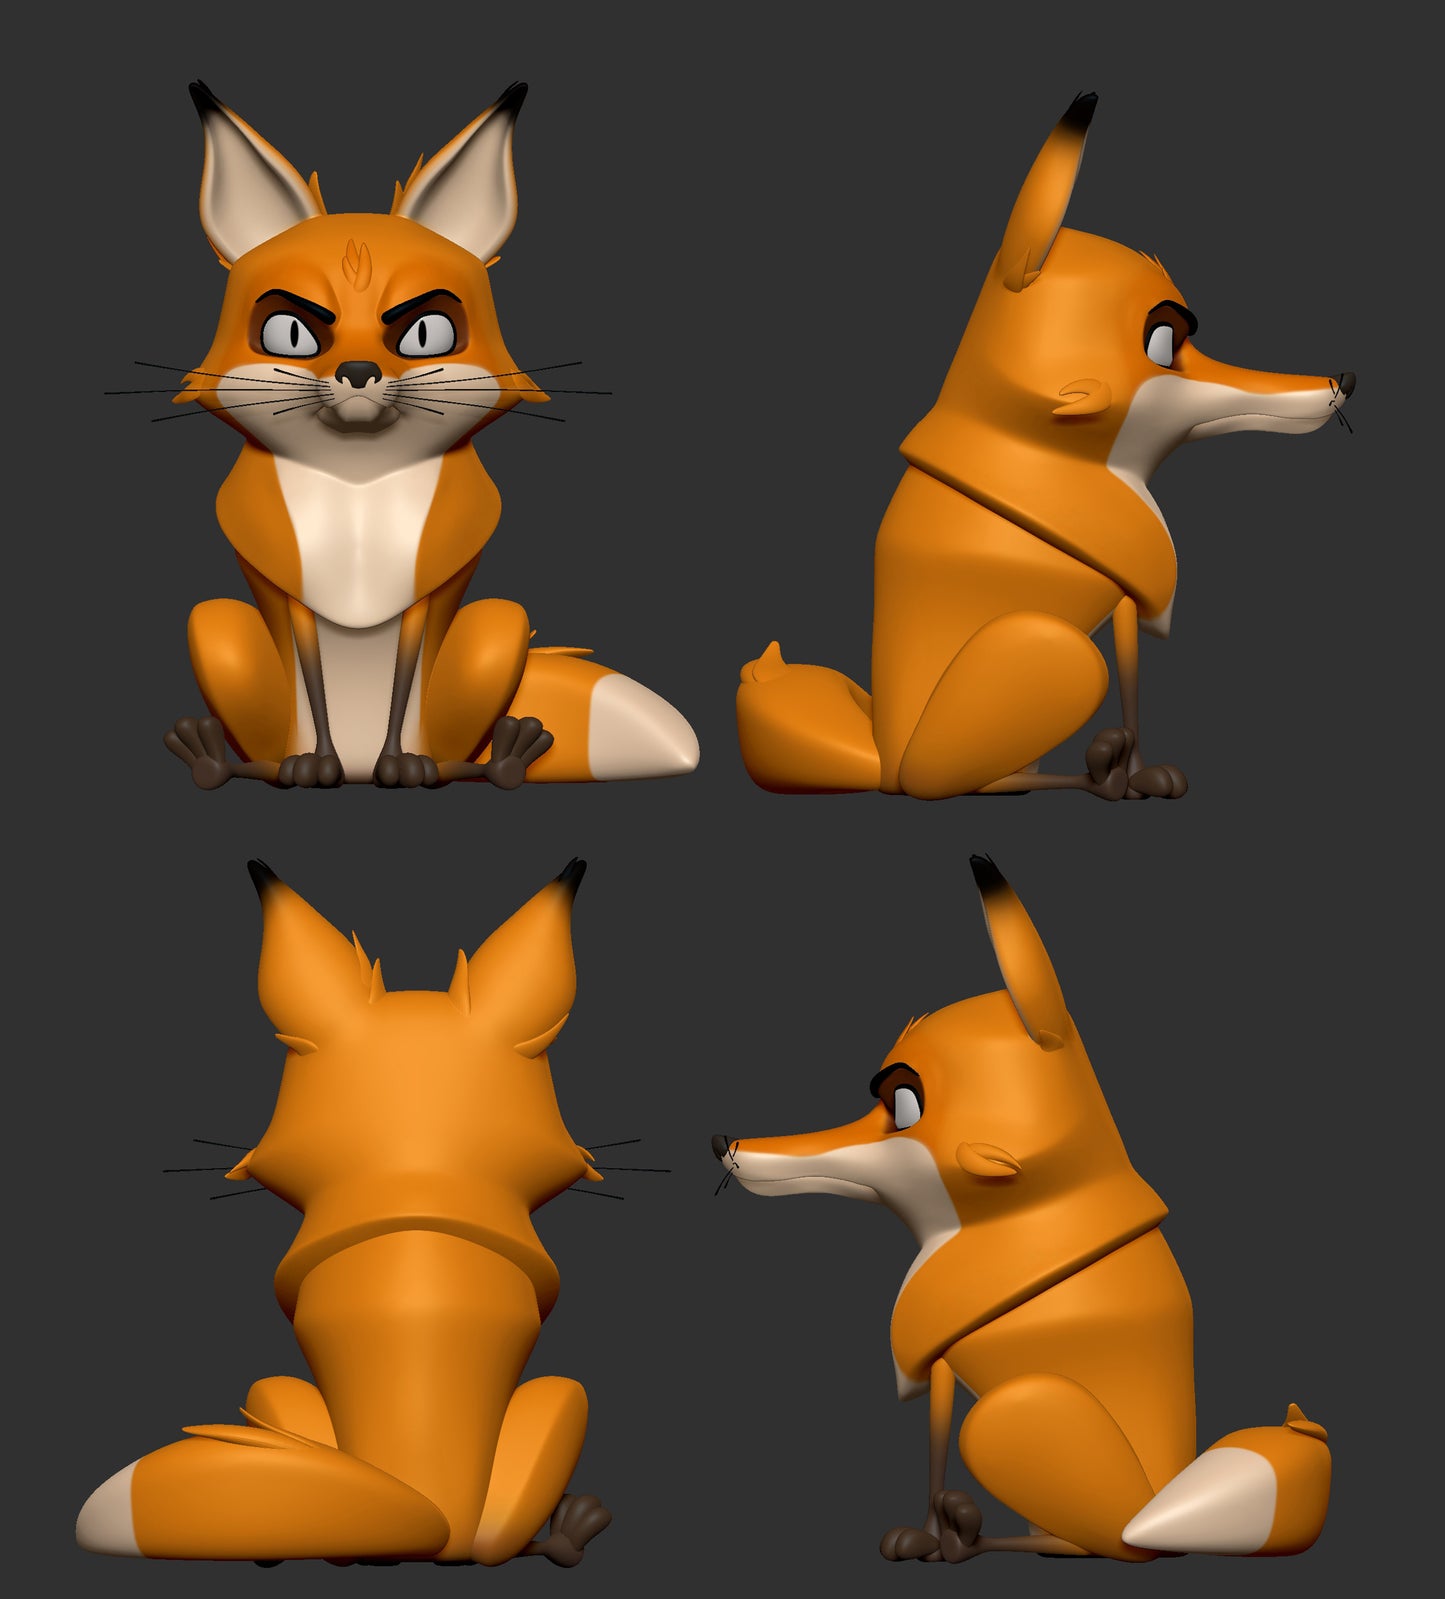 Sculpting a Stylized Fox